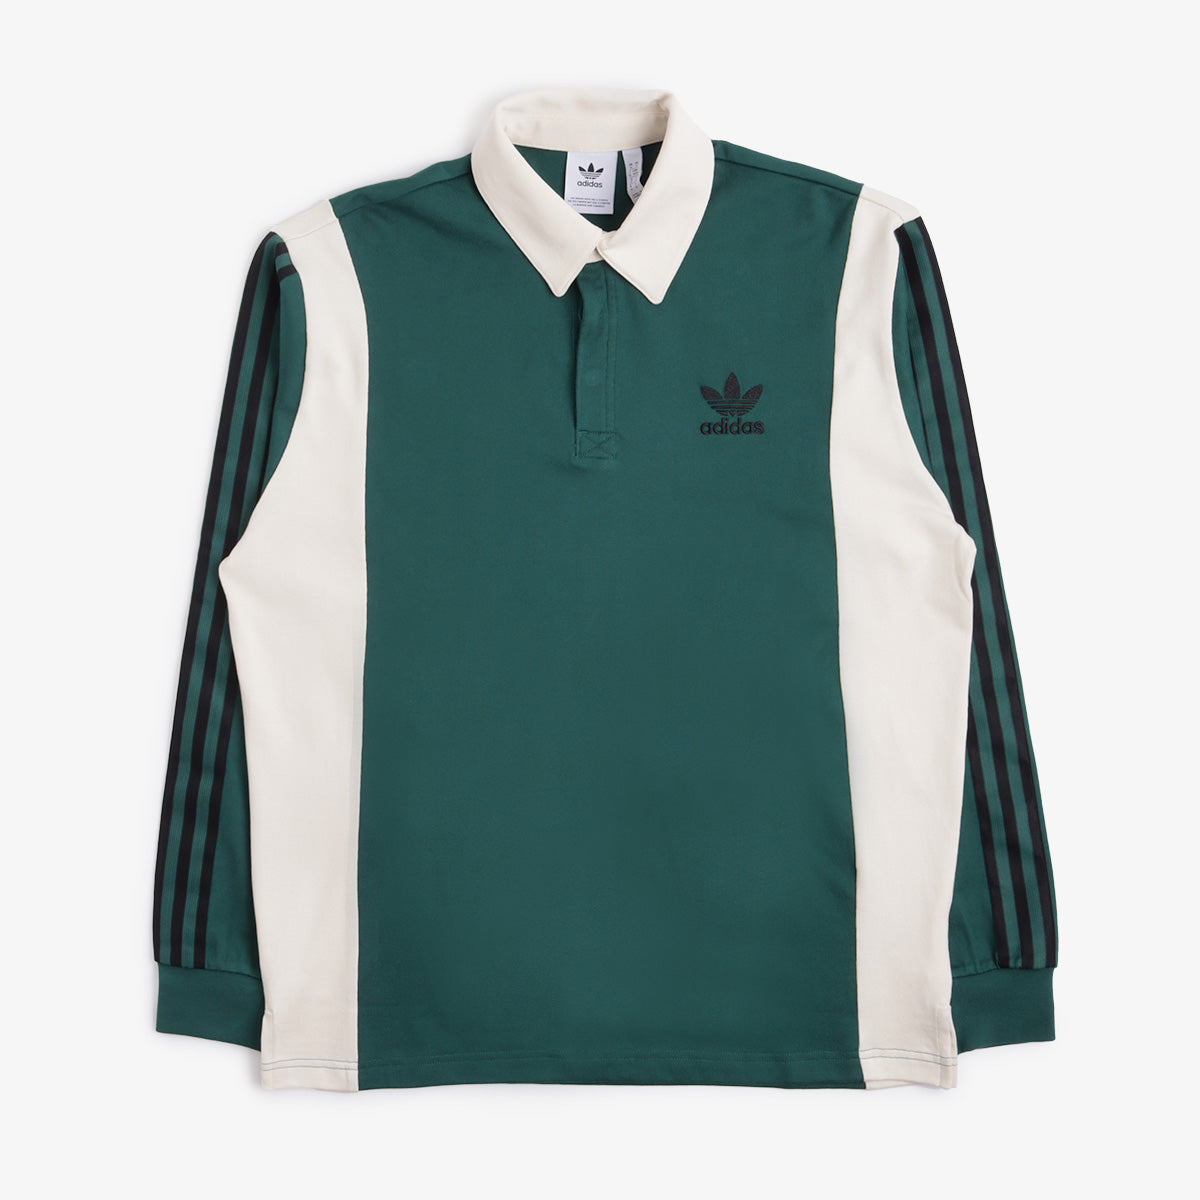 Adidas Originals Rugby Shirt, Collegiate Green, Detail Shot 1